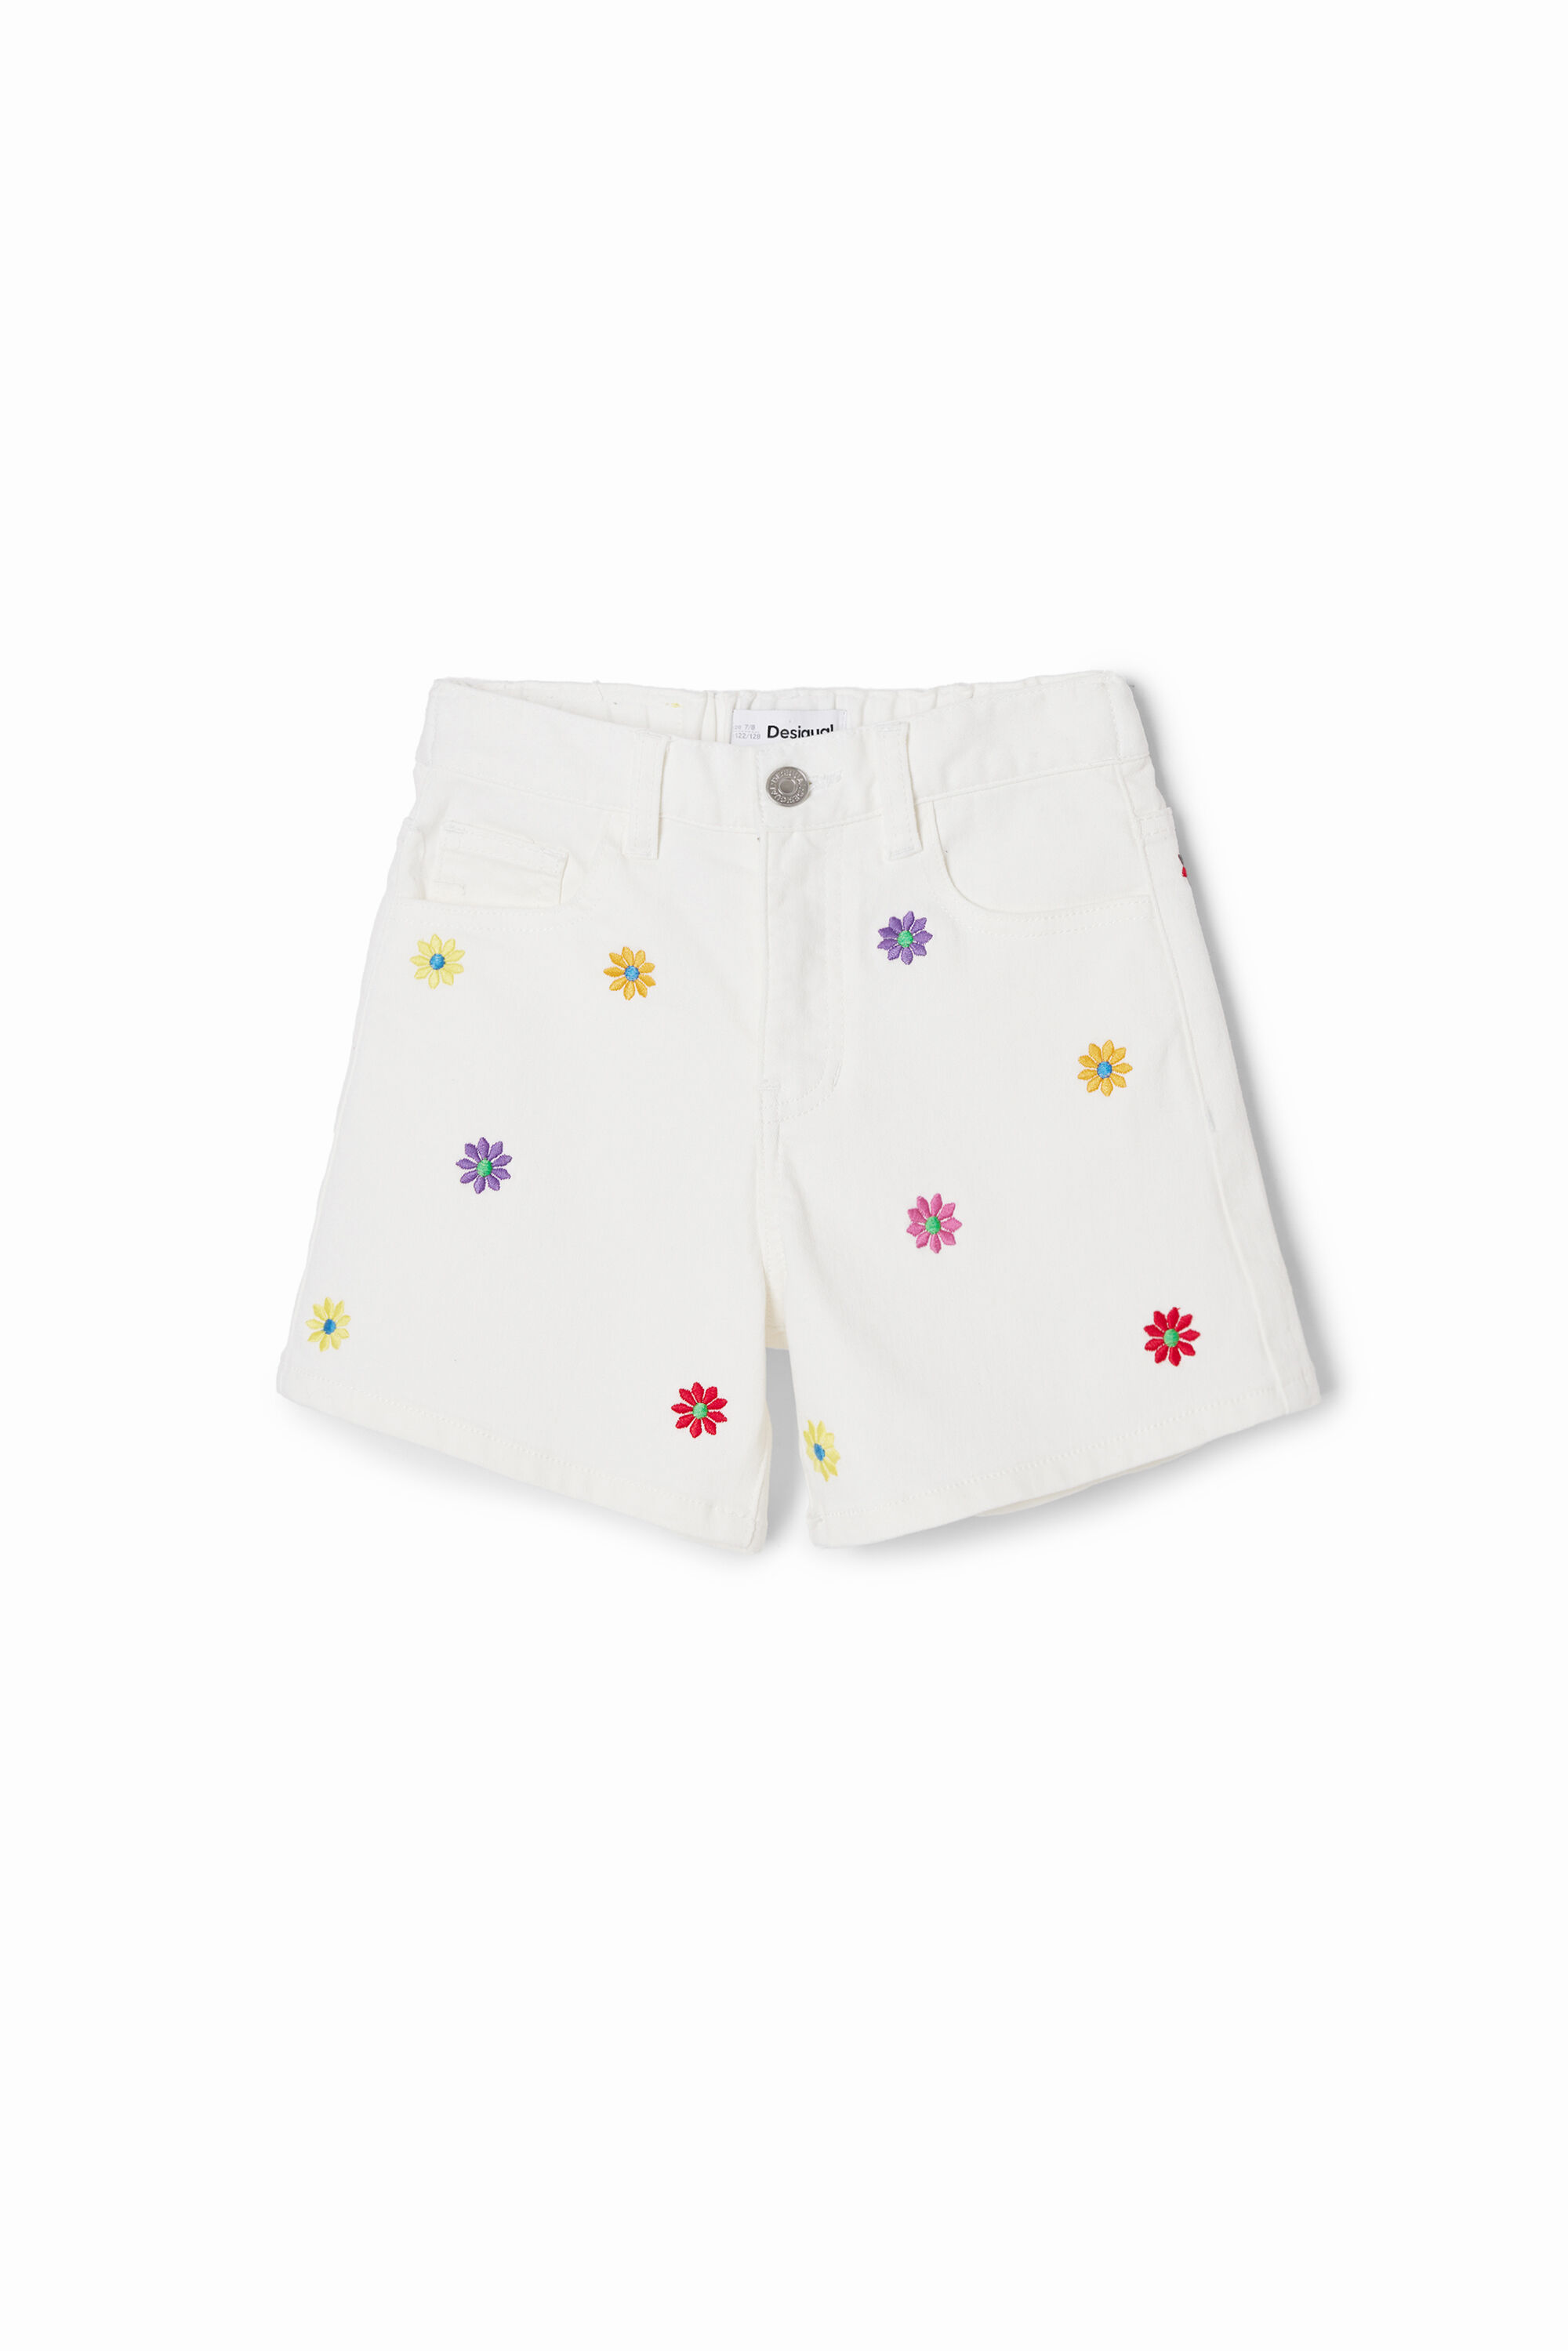 Daisy denim shorts - WHITE - 11/12